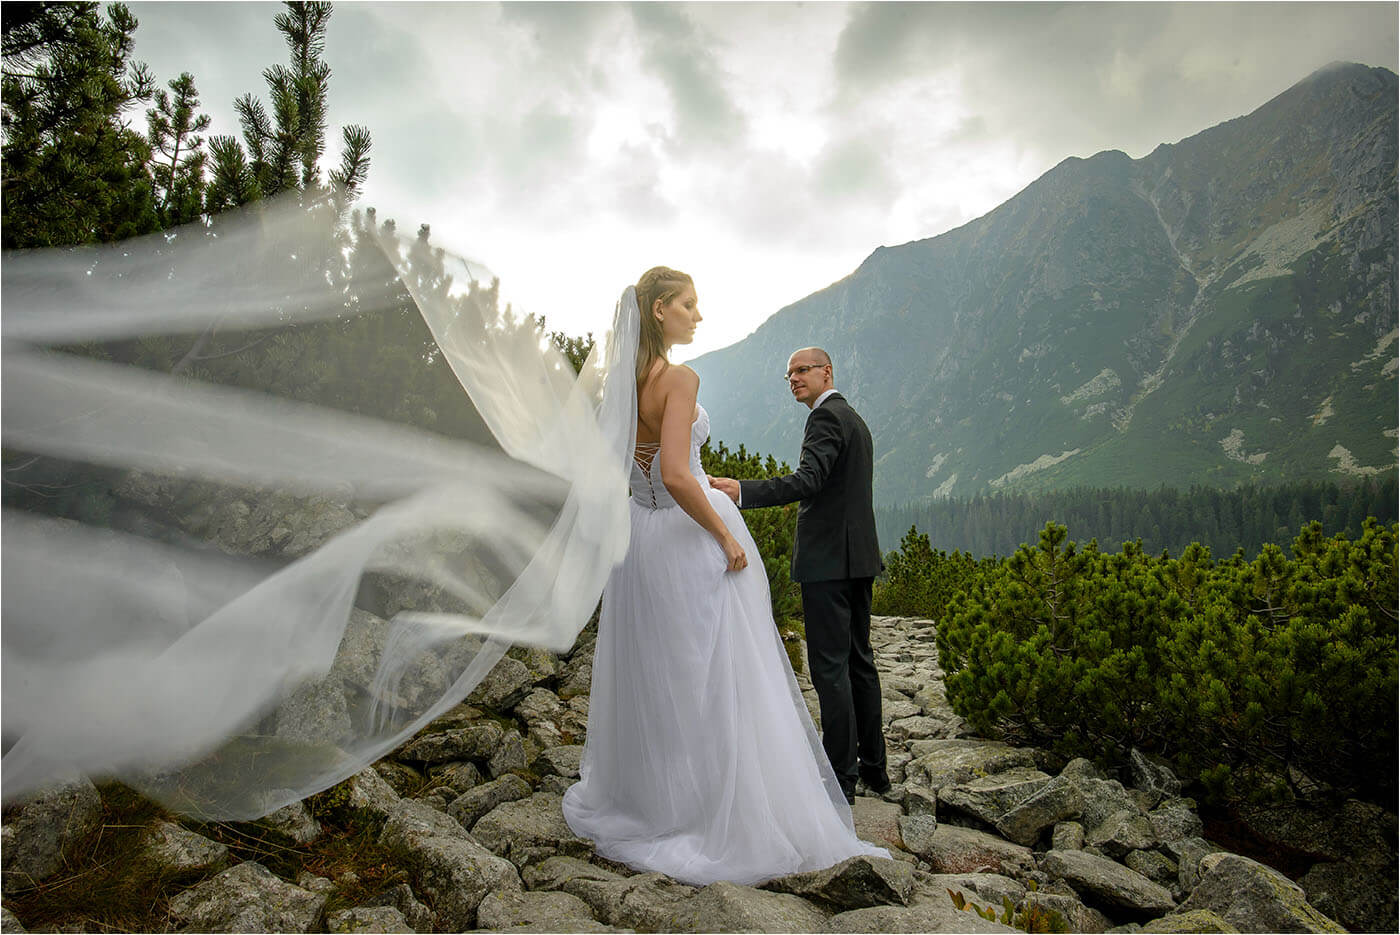 Destination Wedding Photoshoot in Slovakia (Tartra)